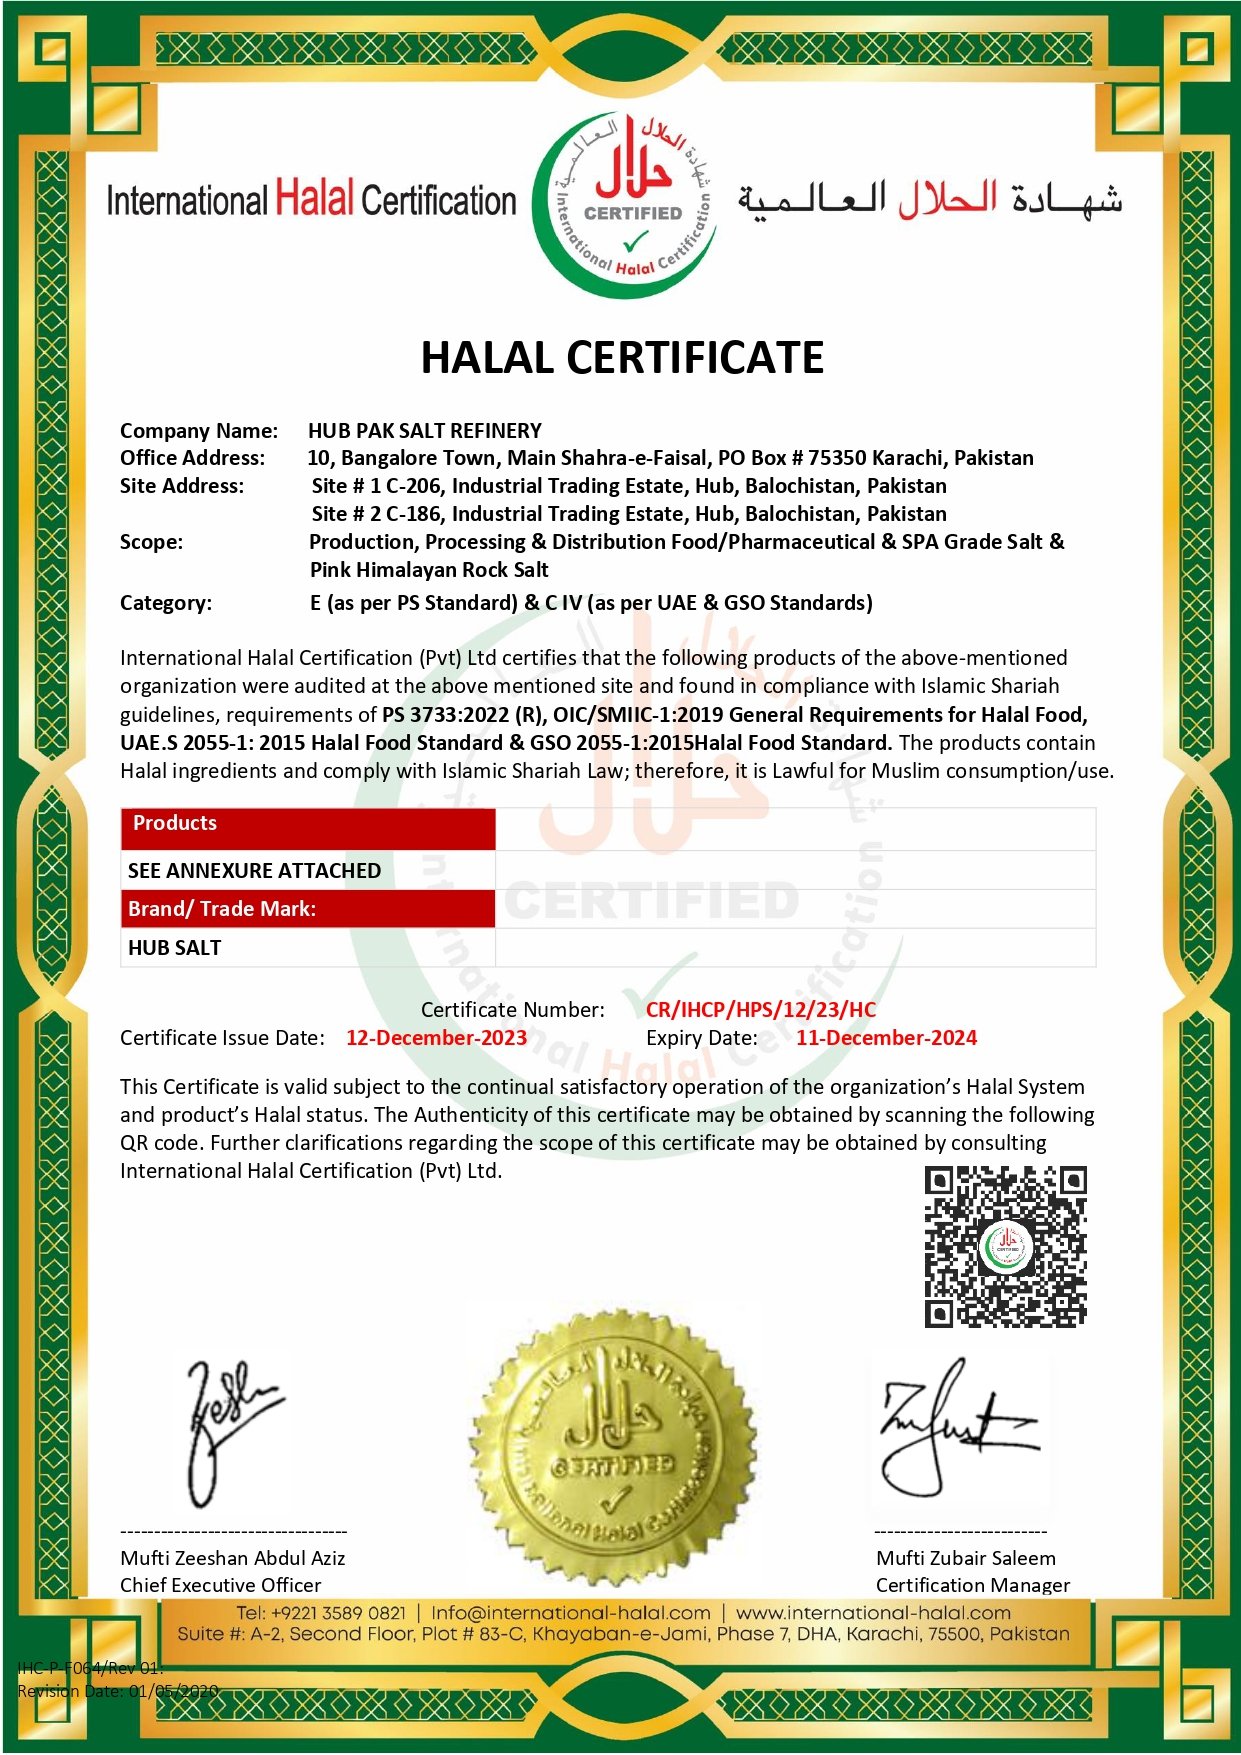 IHC Halal Certificate-HUB PAK SALT REFINERY-2023-2024_page-0001